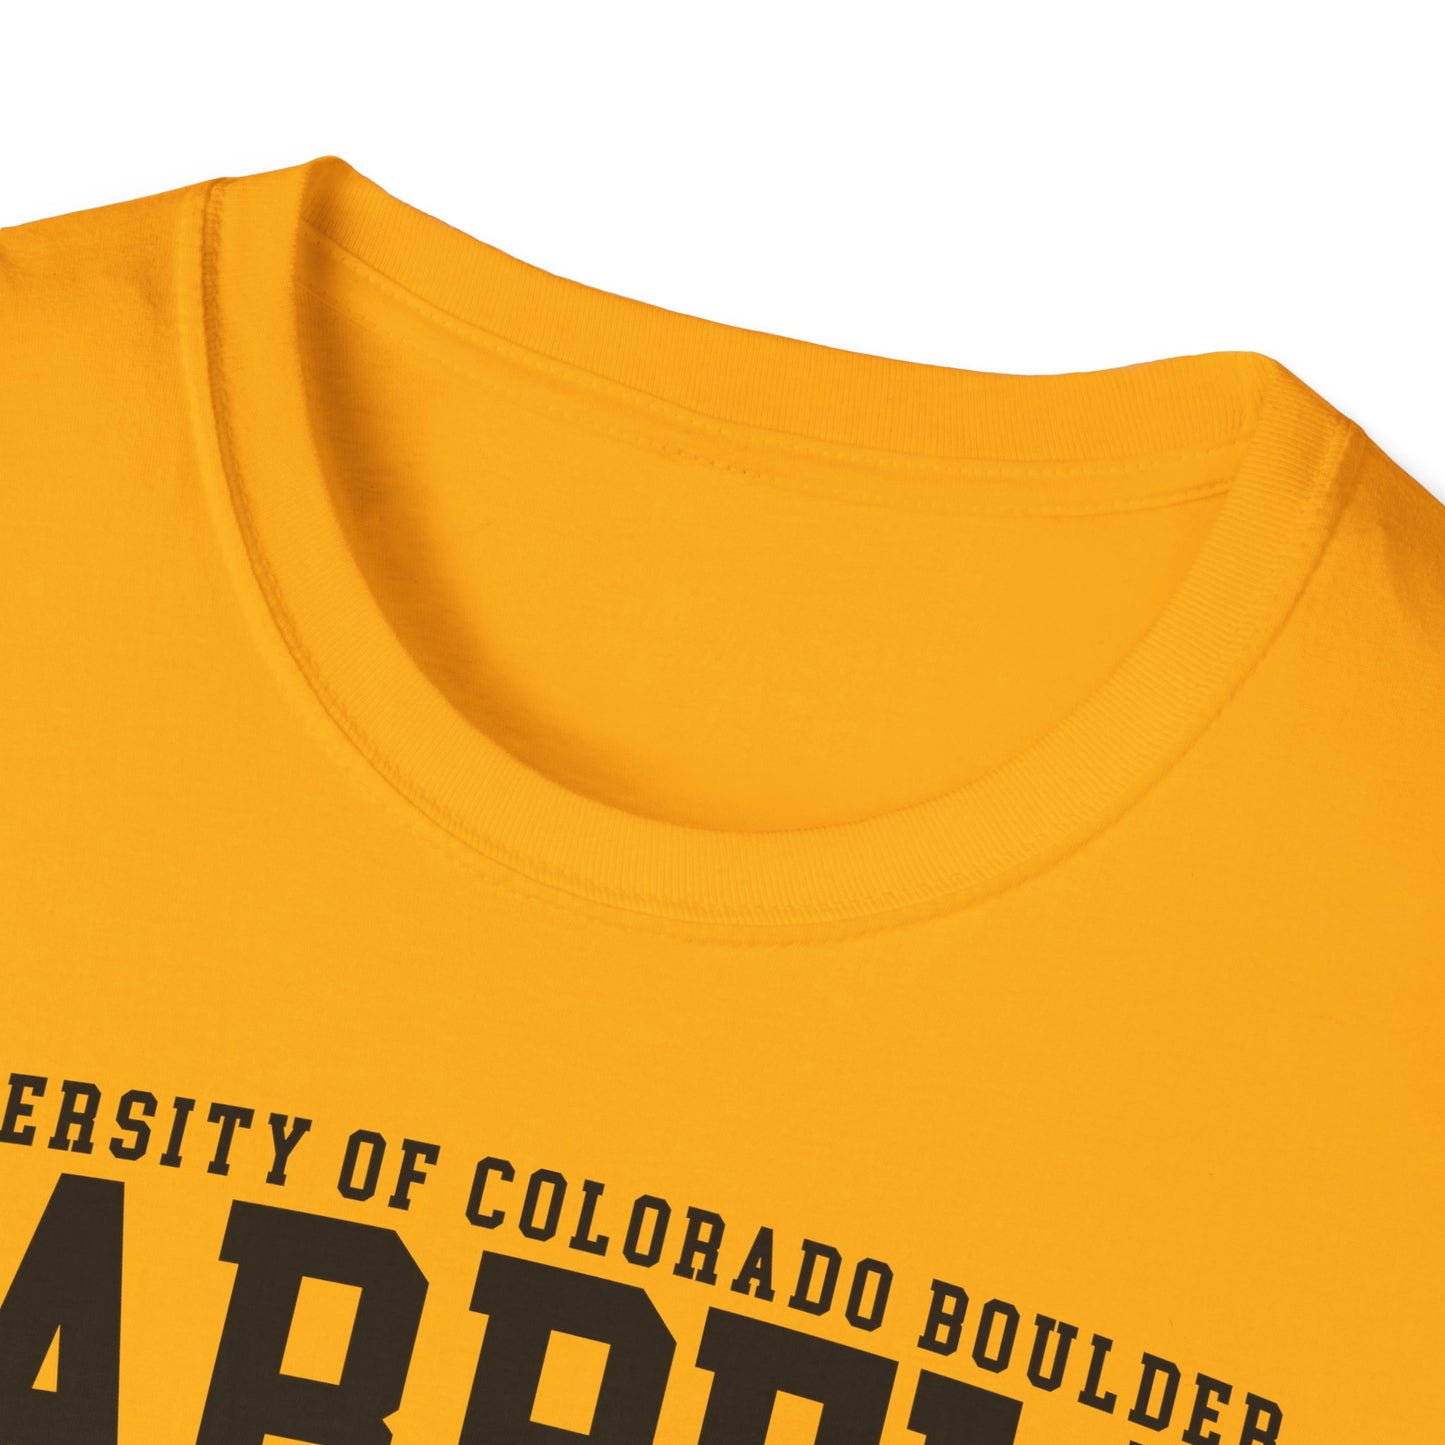 CU Barbell Core Values T-Shirt: Community